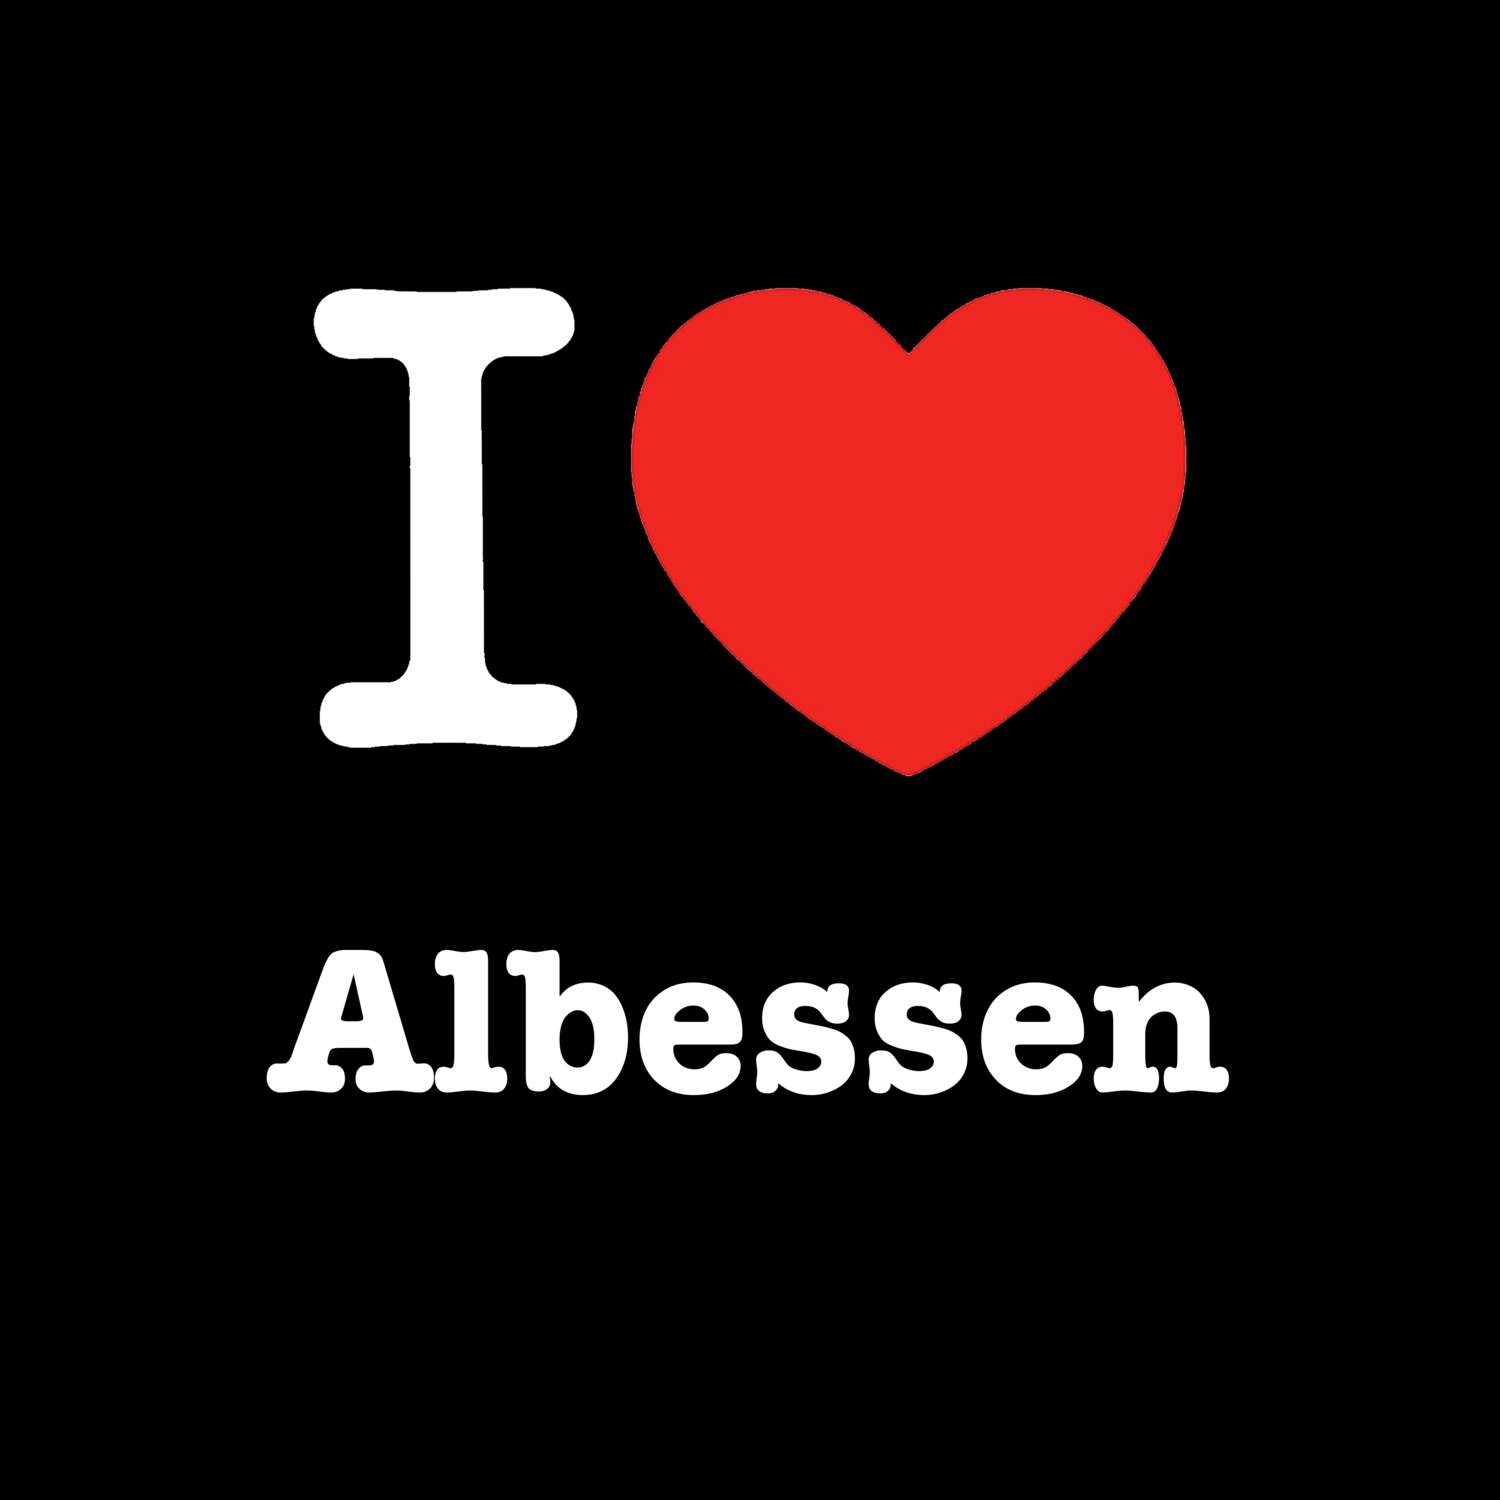 Albessen T-Shirt »I love«